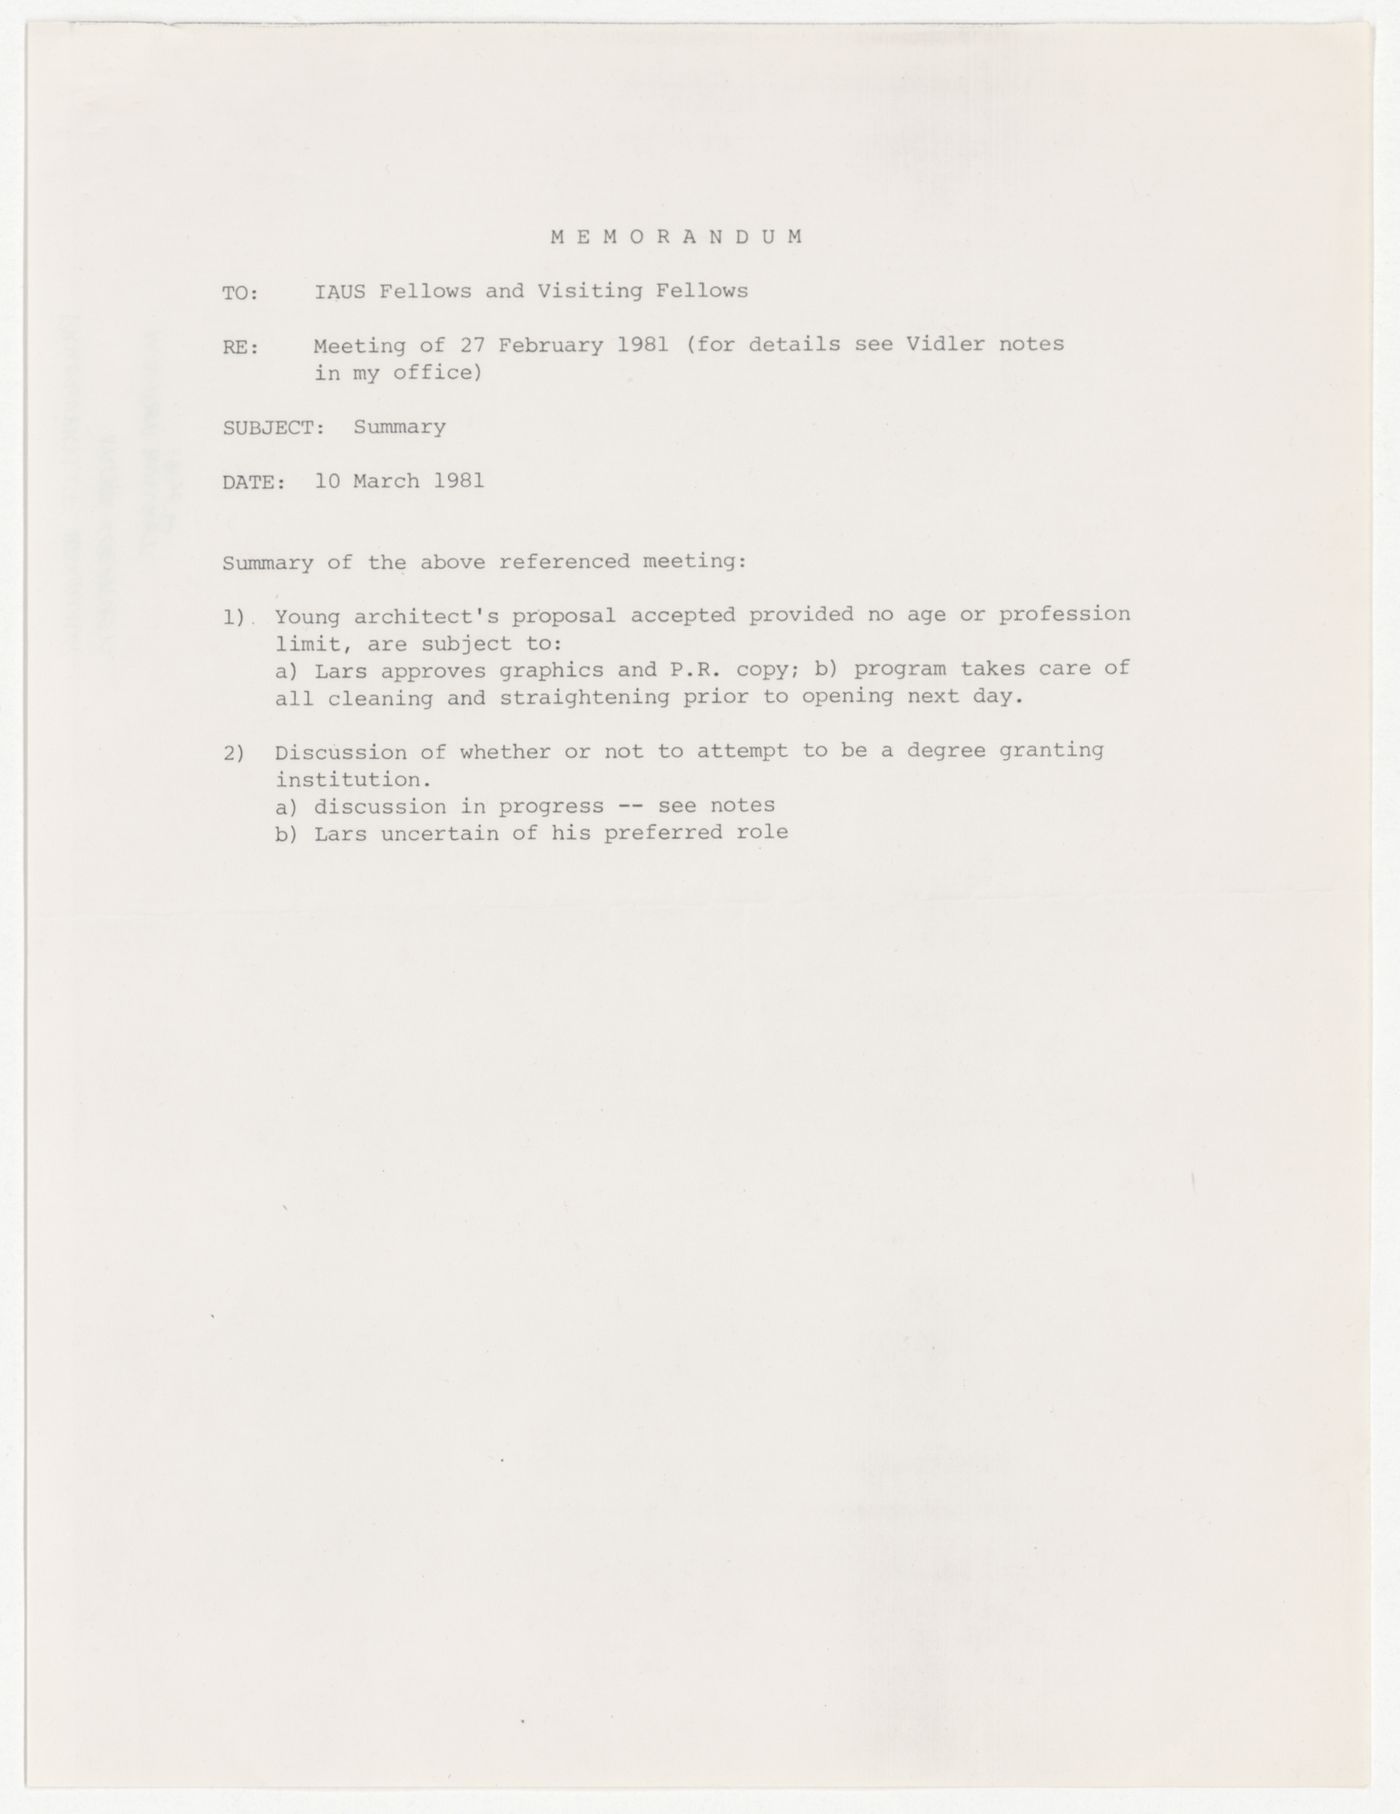 Memorandum to the Fellows and visiting Fellows summarizing meeting of February 27th 1981